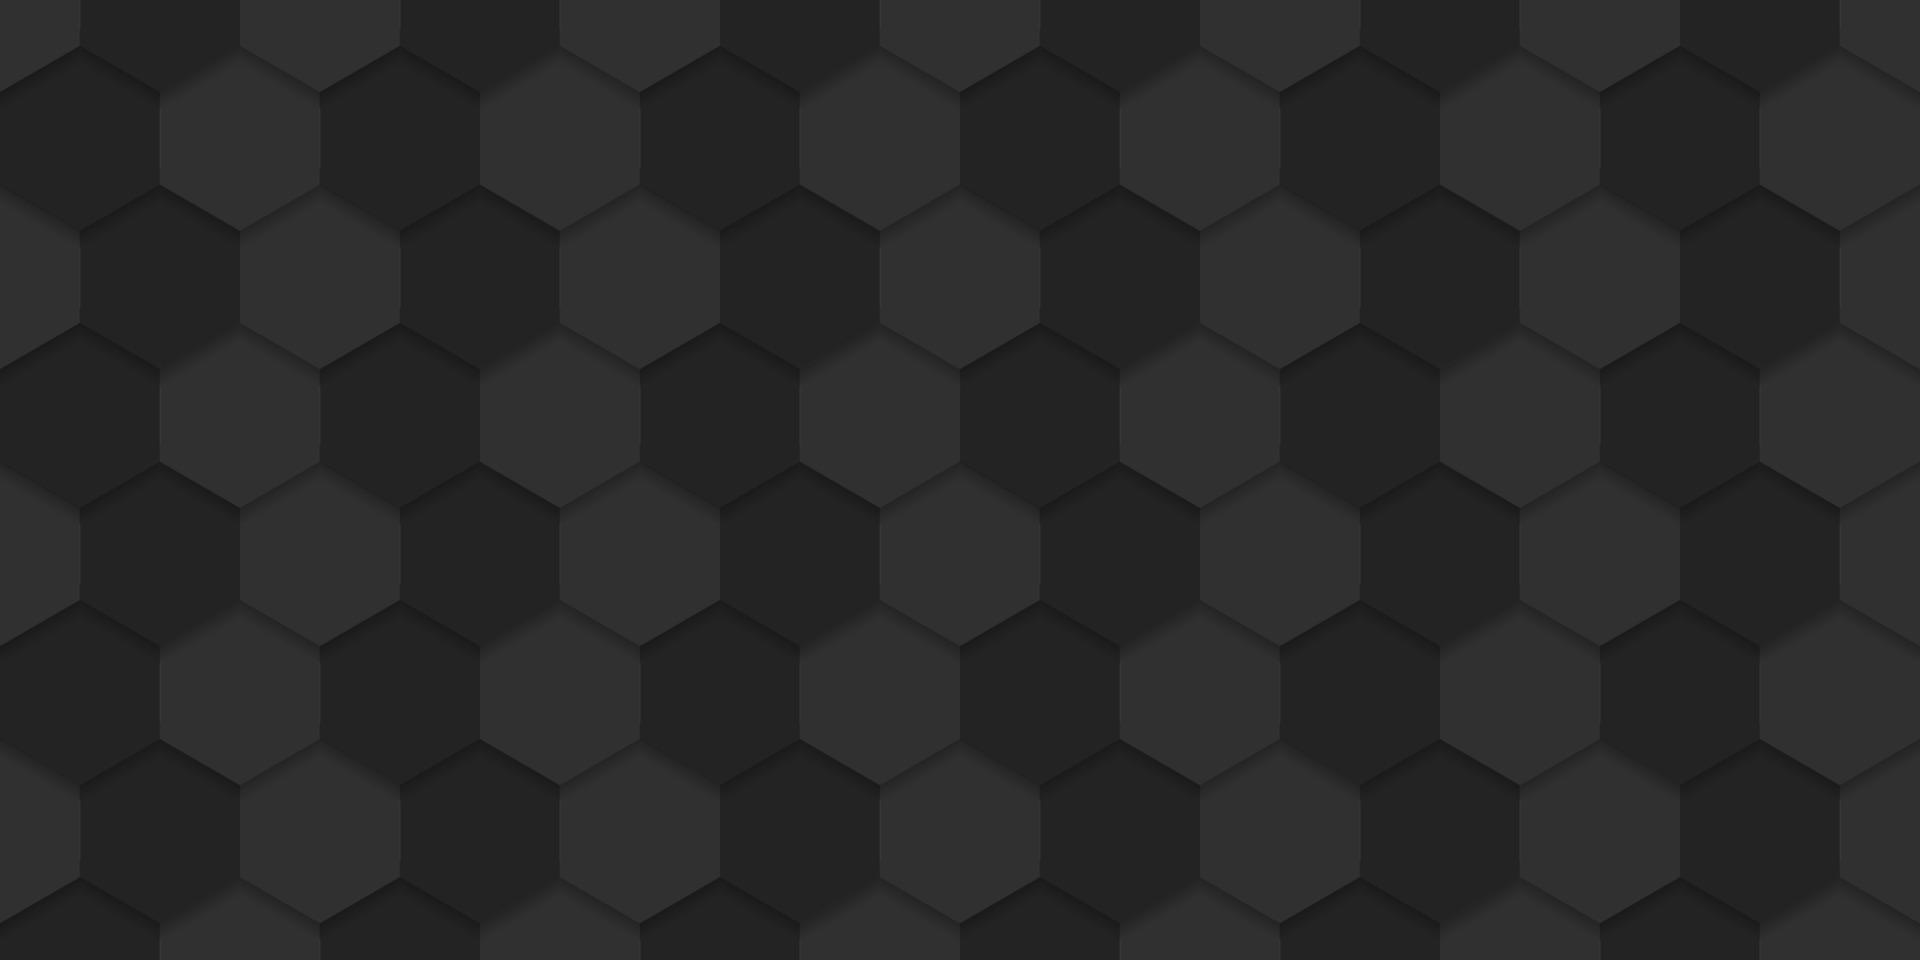 Abstract Dark Horizontal Background. Black Iron Textured Pattern With Hexagons. Steel Honeycomb Texture Wallpaper. Abstract Modern Design. Vector Illustration.